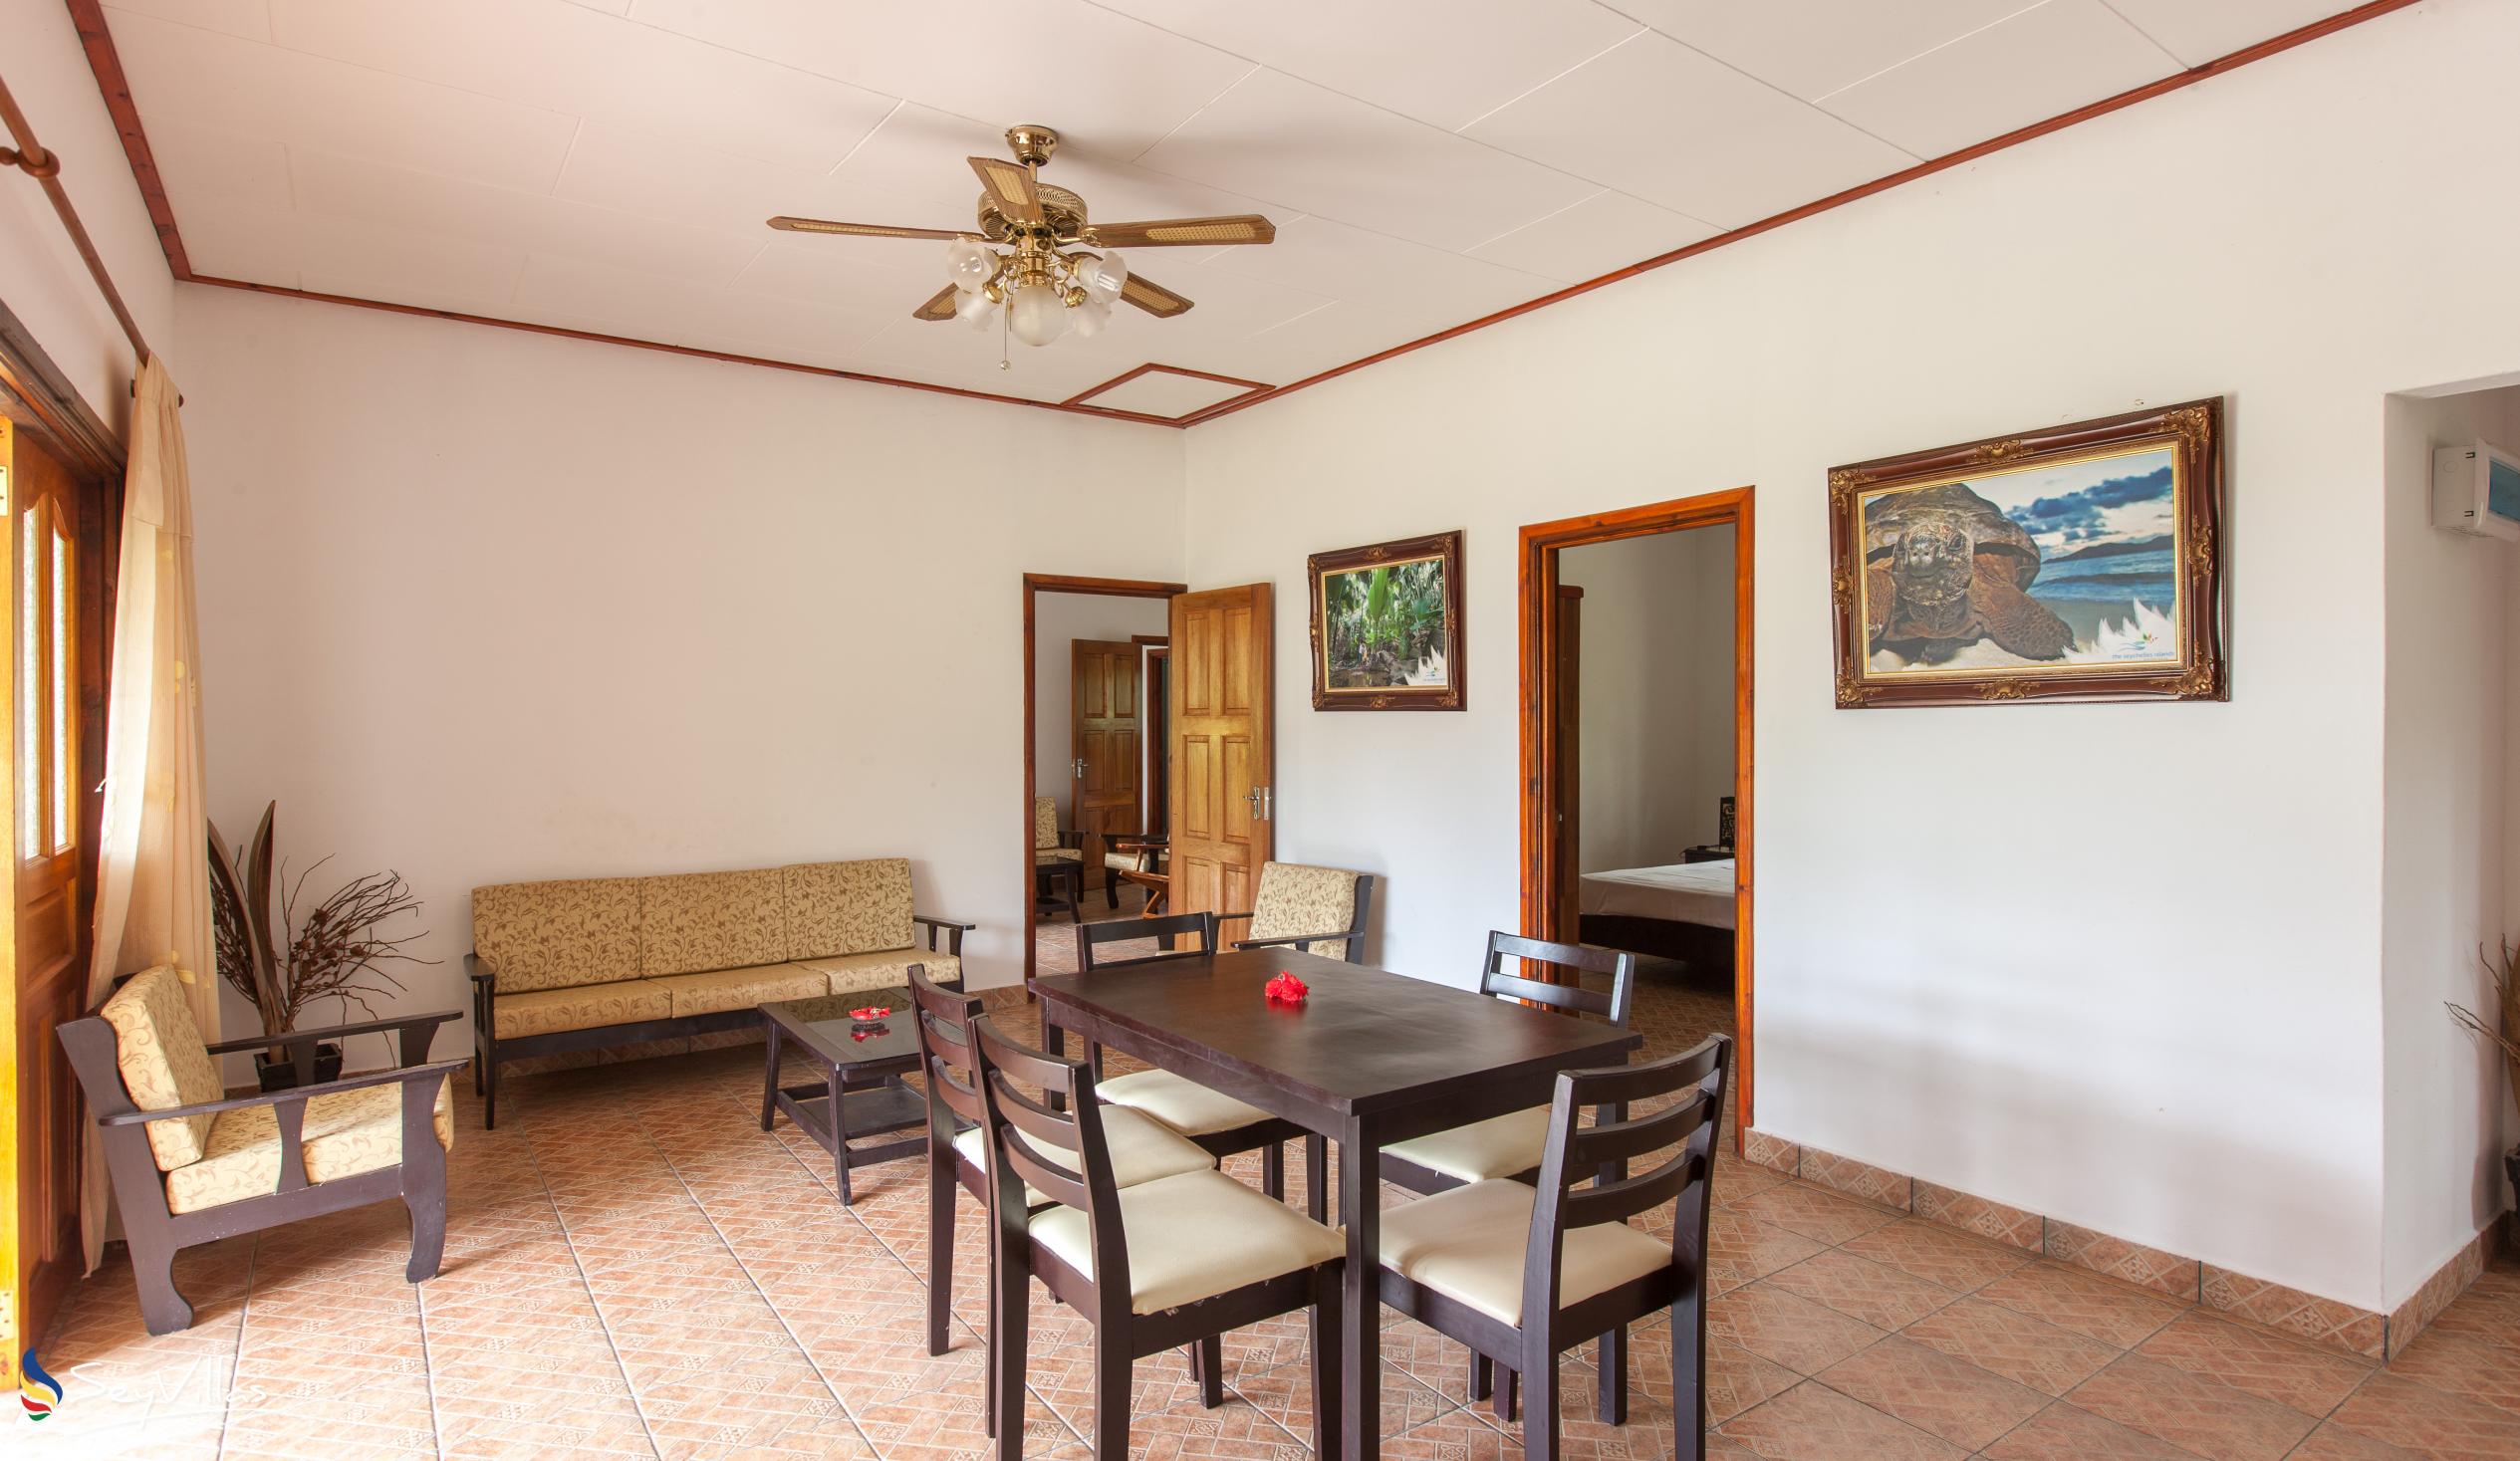 Foto 55: Zerof Self Catering  Apartments - Appartement à 3 chambres - La Digue (Seychelles)